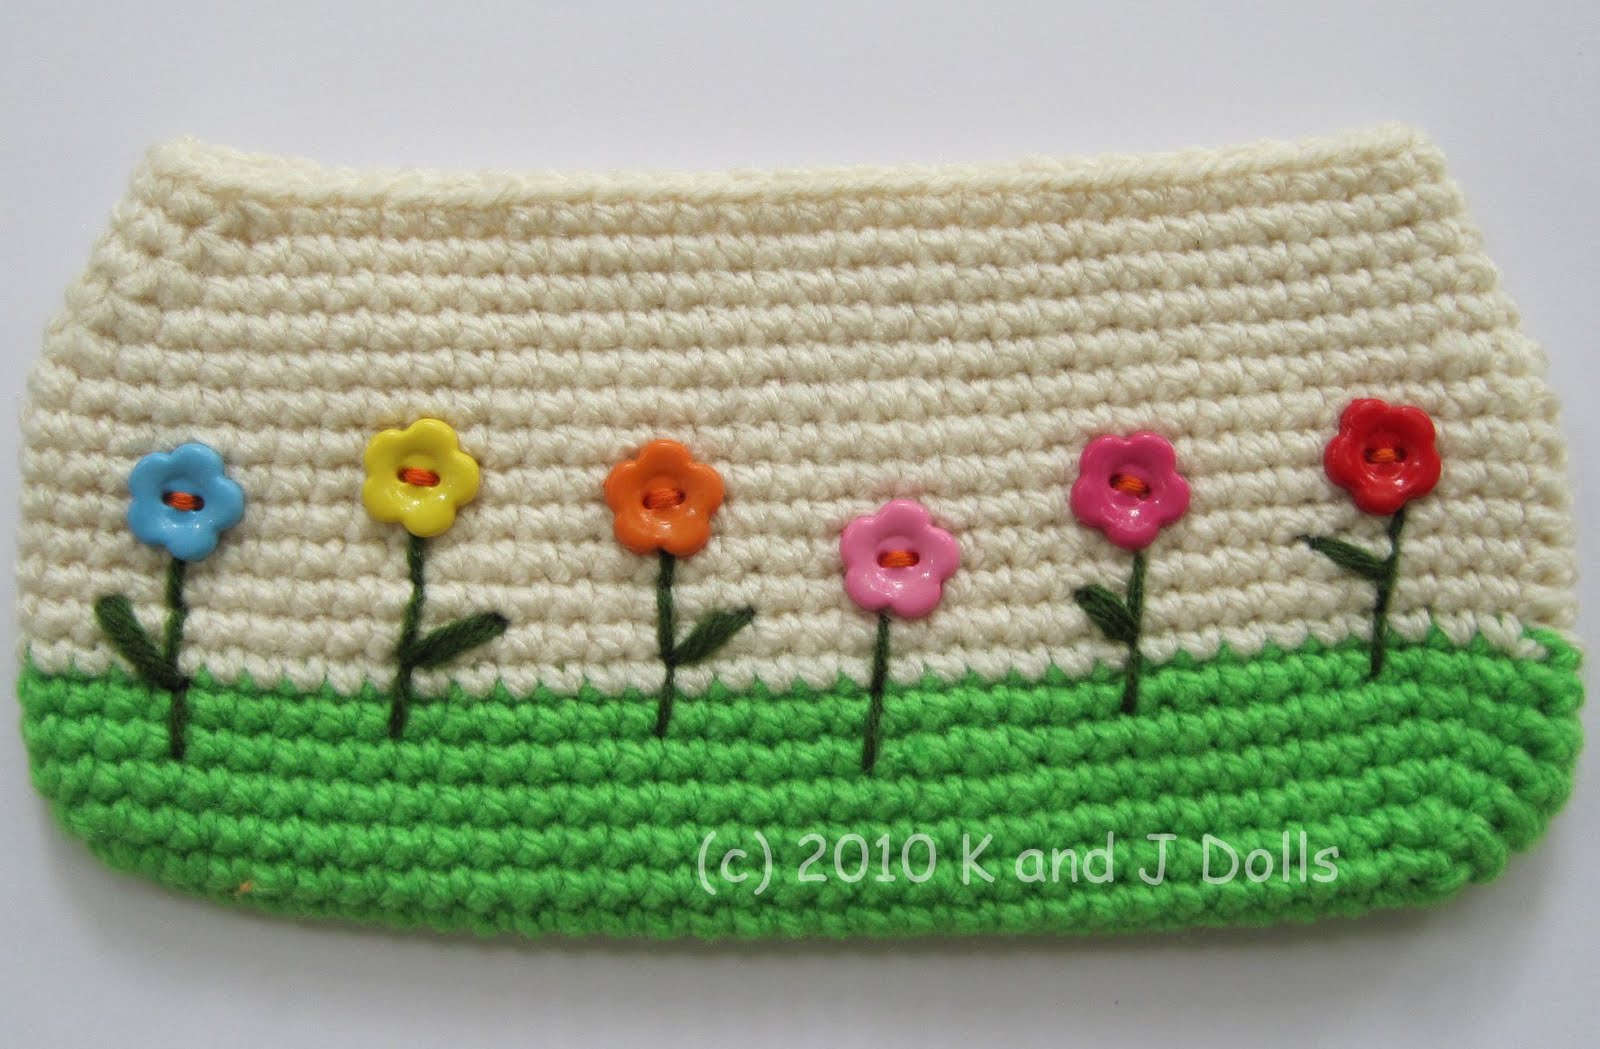 flower crochet patterns | eBay - Electronics, Cars, Fashion